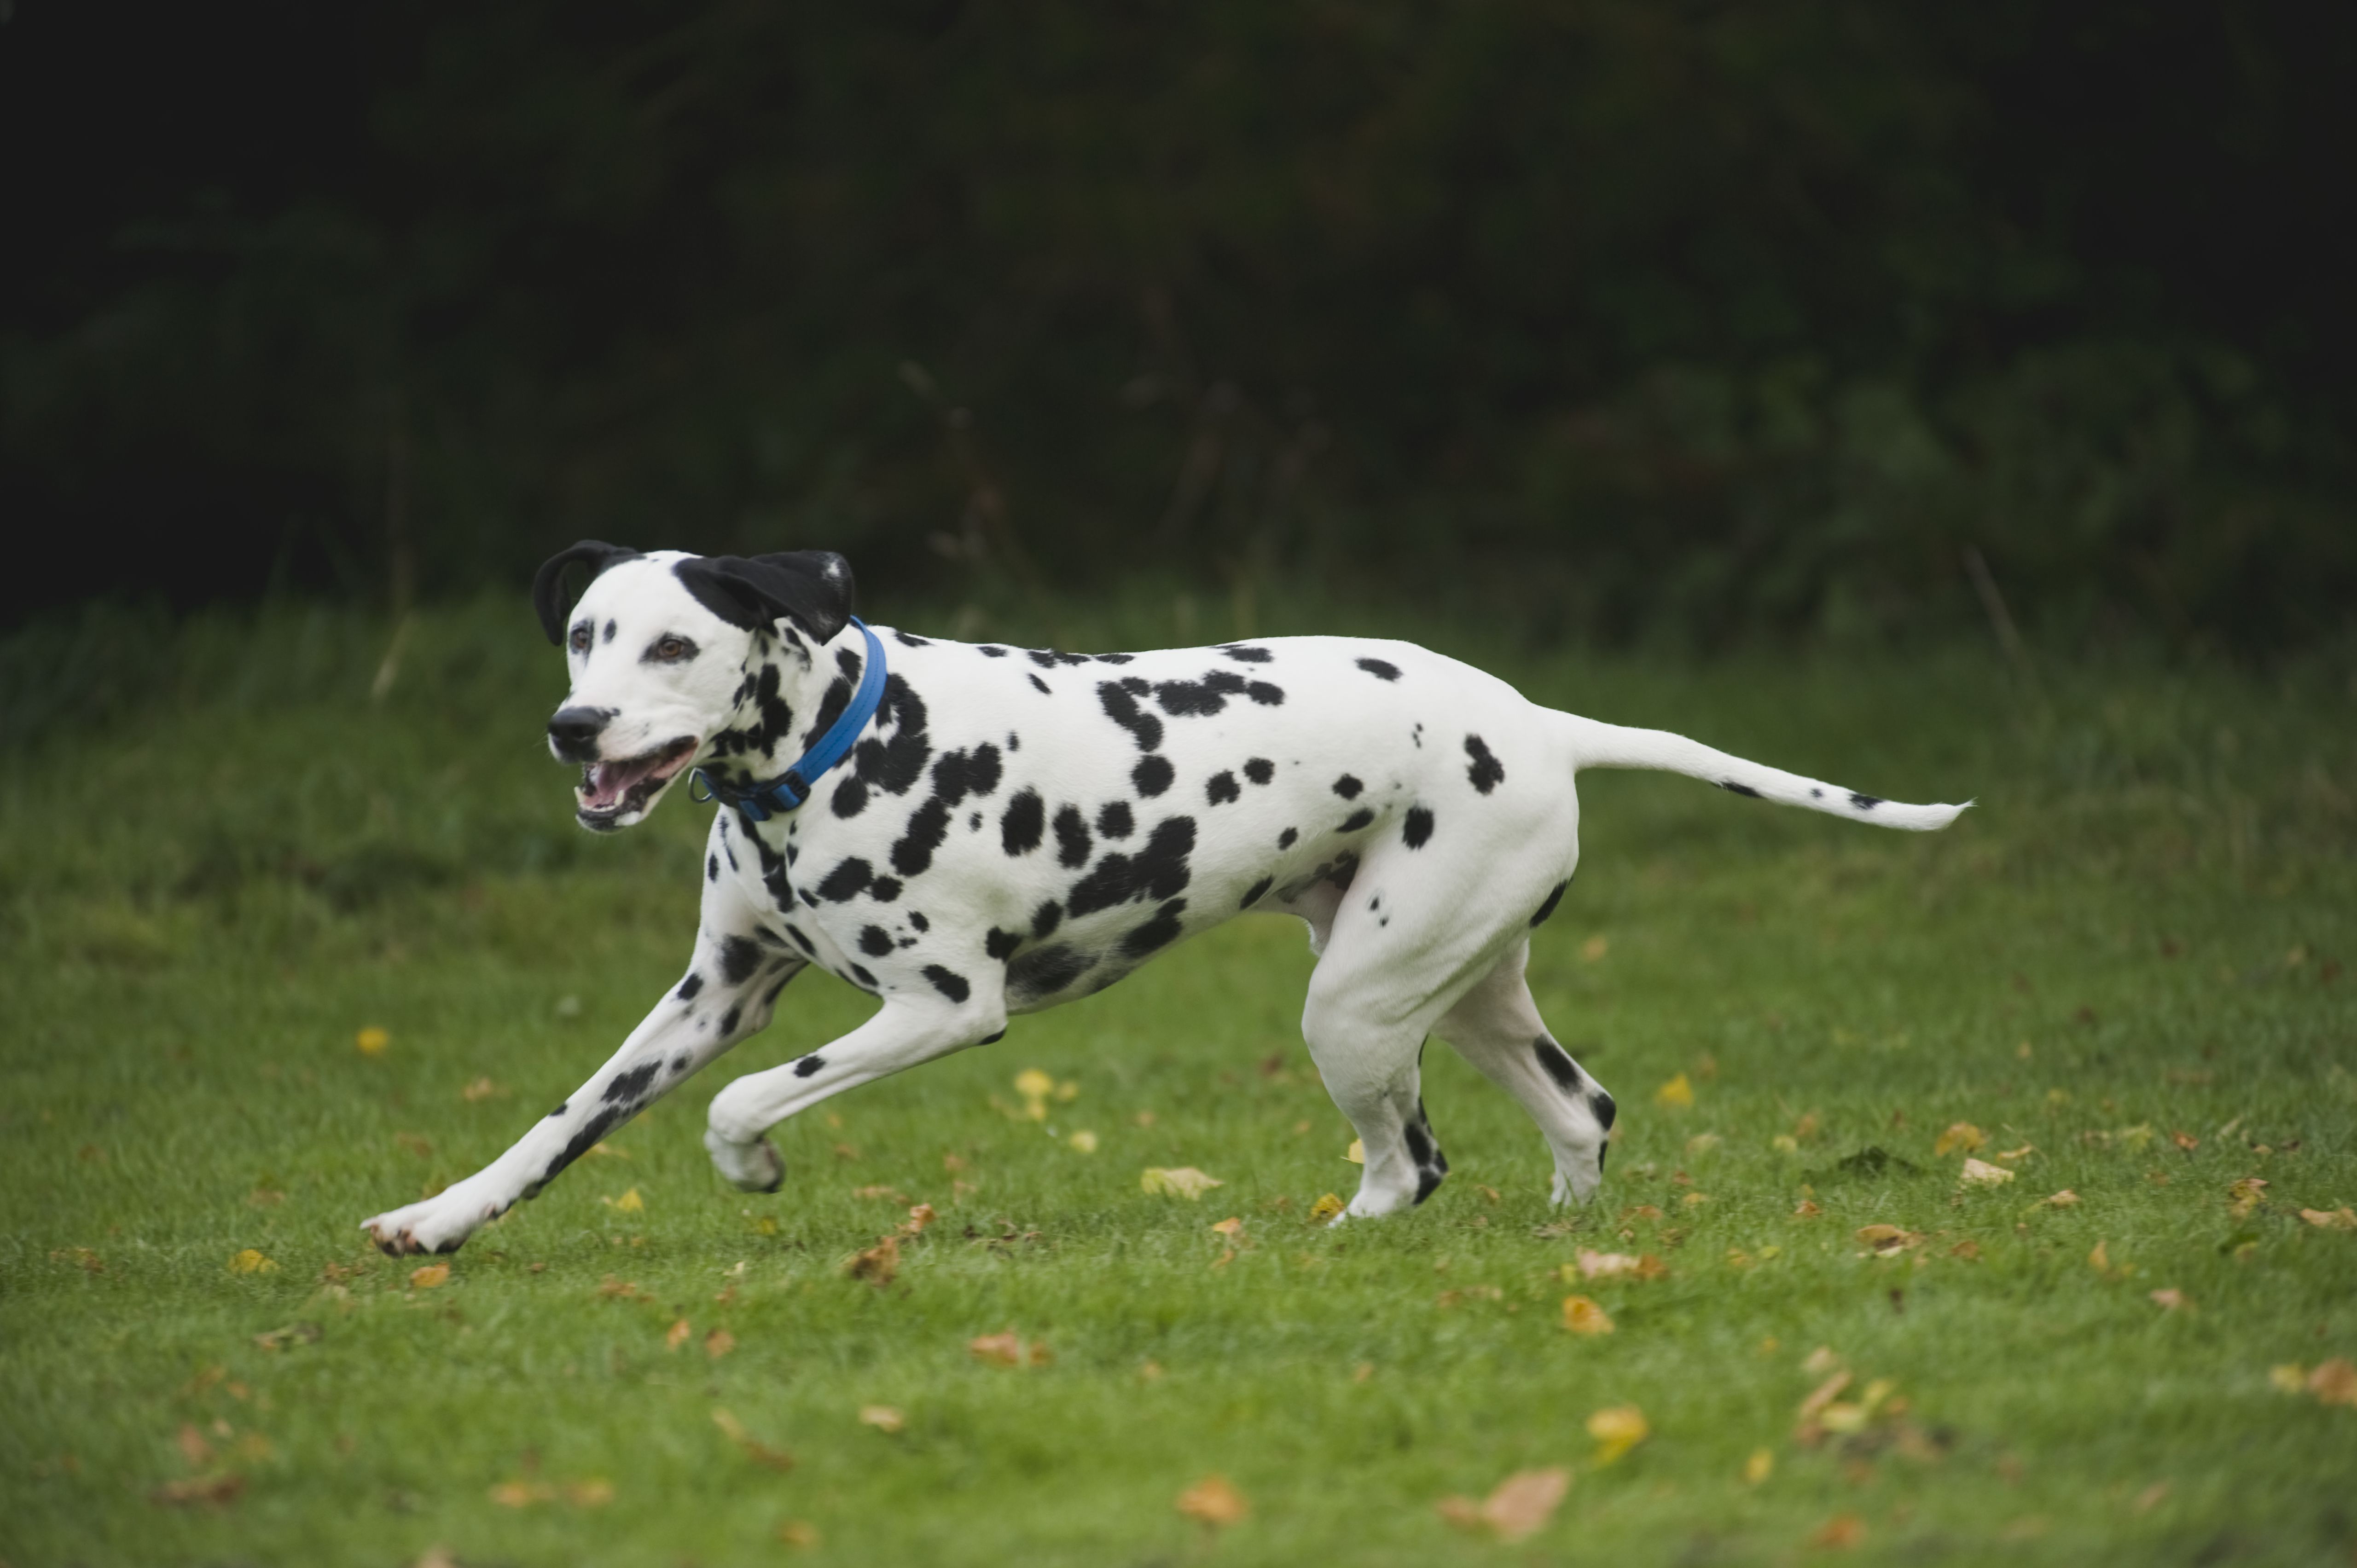 Energetic Dalmatian running on grass